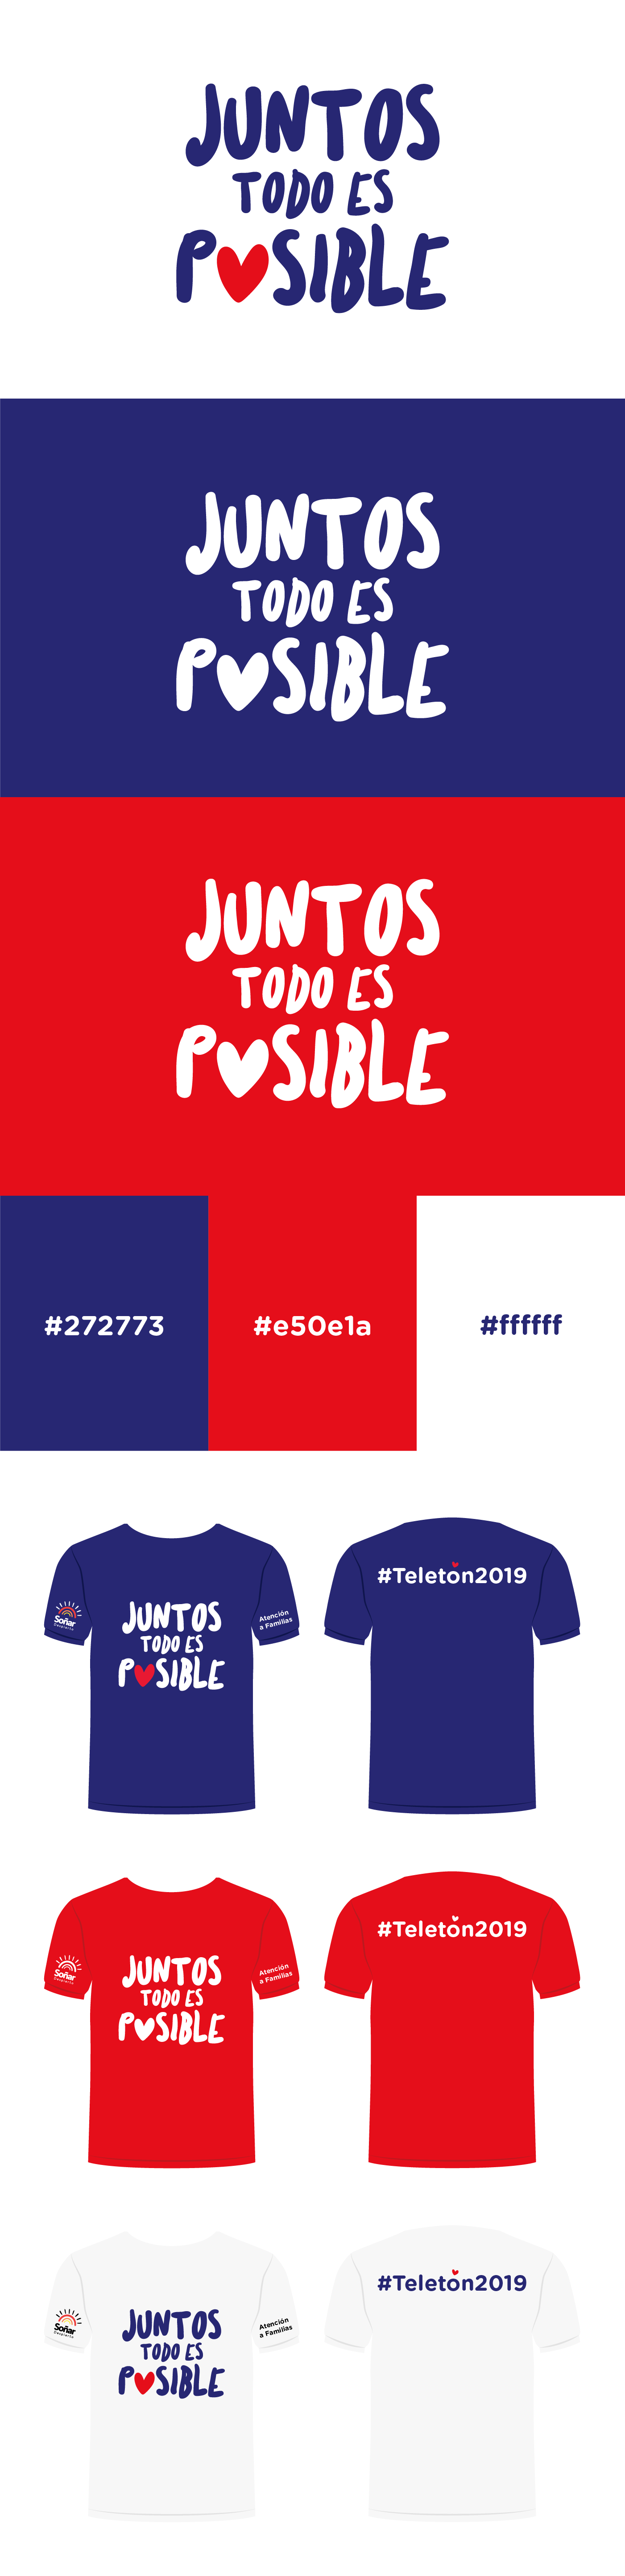 Juntos todo es posible - Teletón Costa Rica 2019